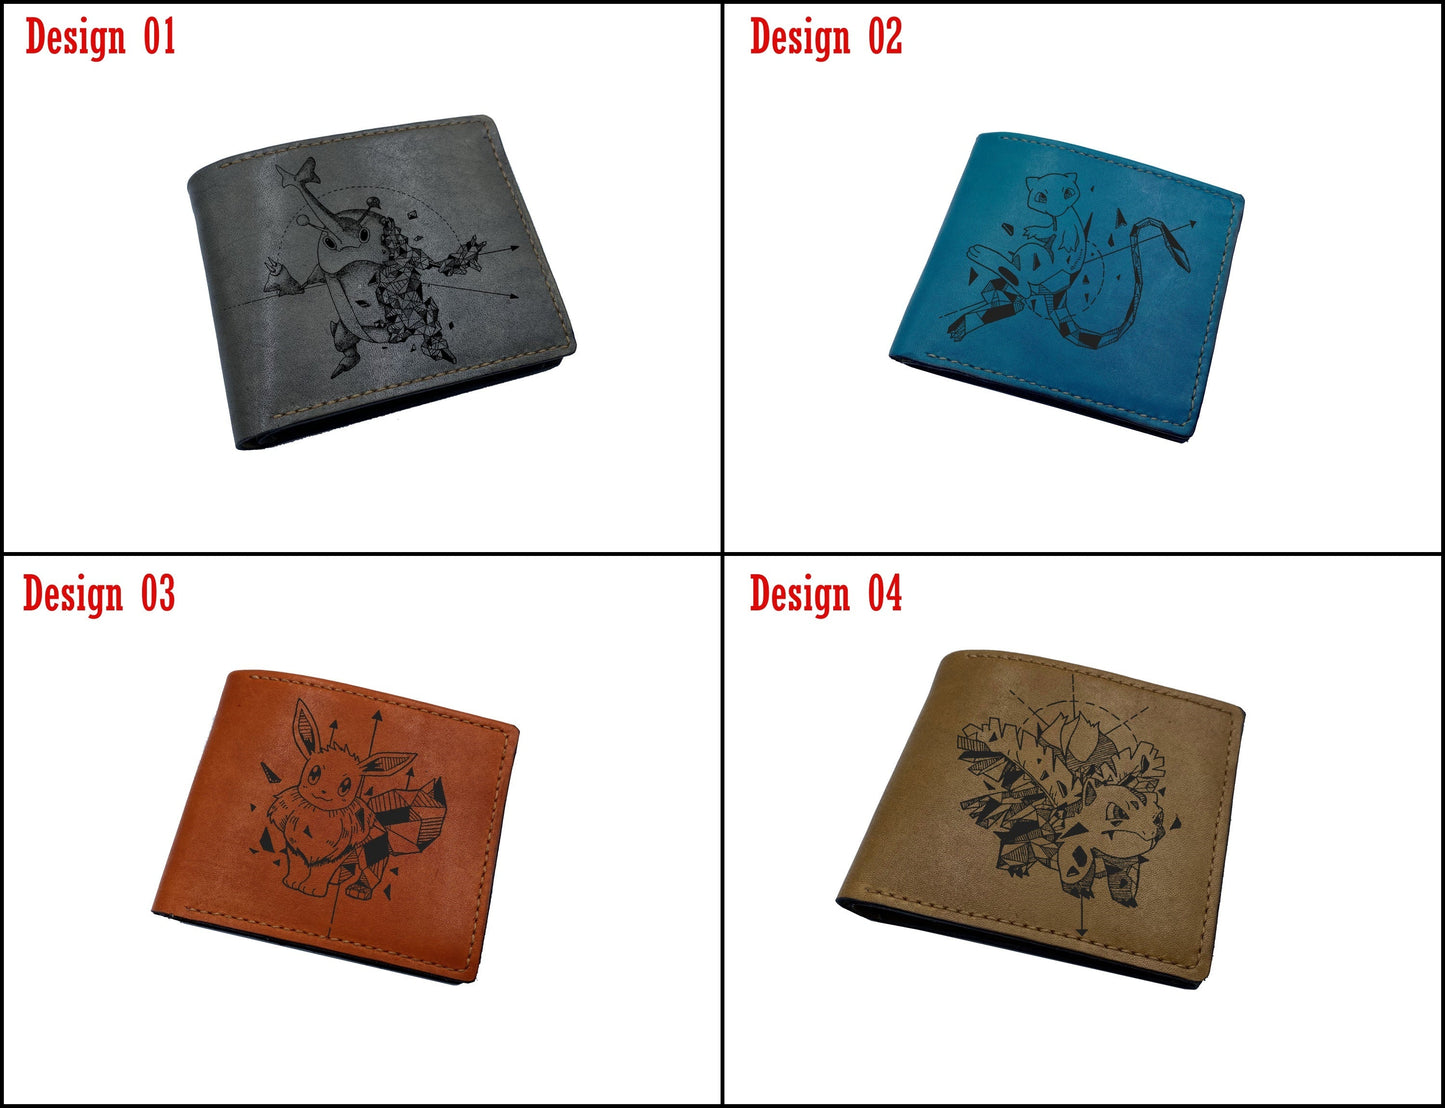 Mayan Corner - Pokemon geometric art leather wallet, customized leather gift for men, pokemon gift ideas -  Haunter PK27108